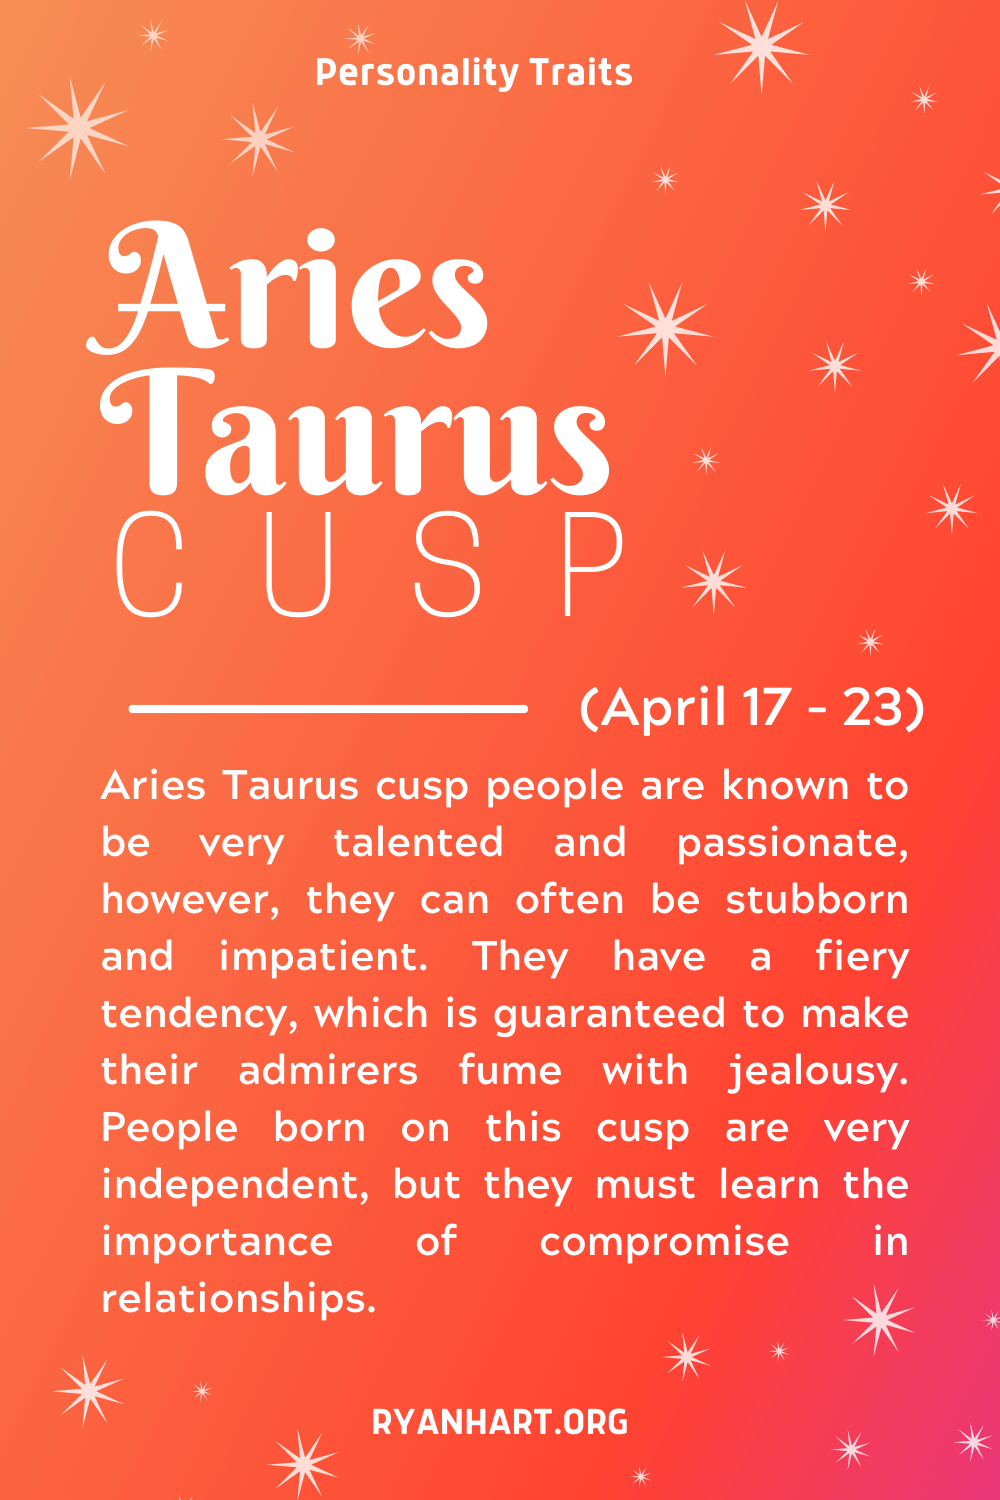 Aries Taurus Cusp Description